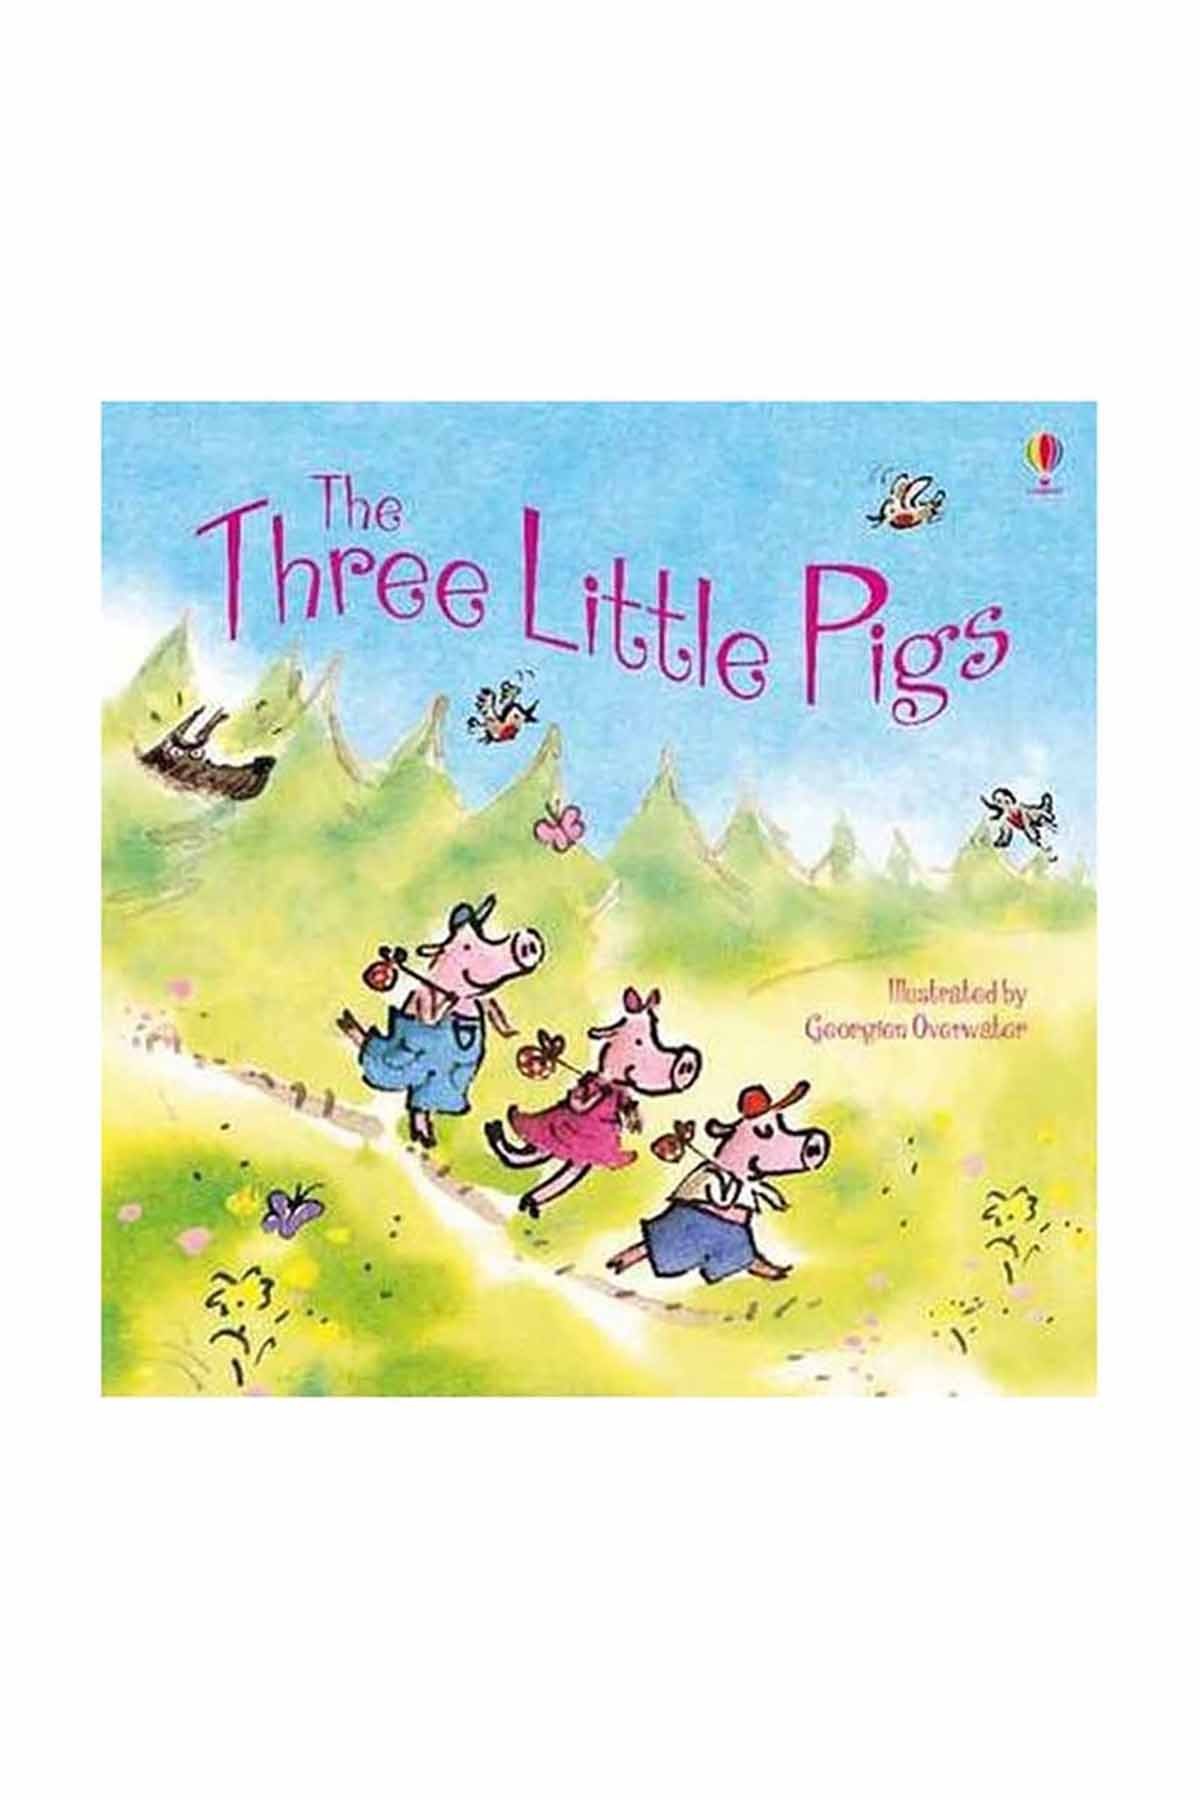 The Usborne Three Little Pigs